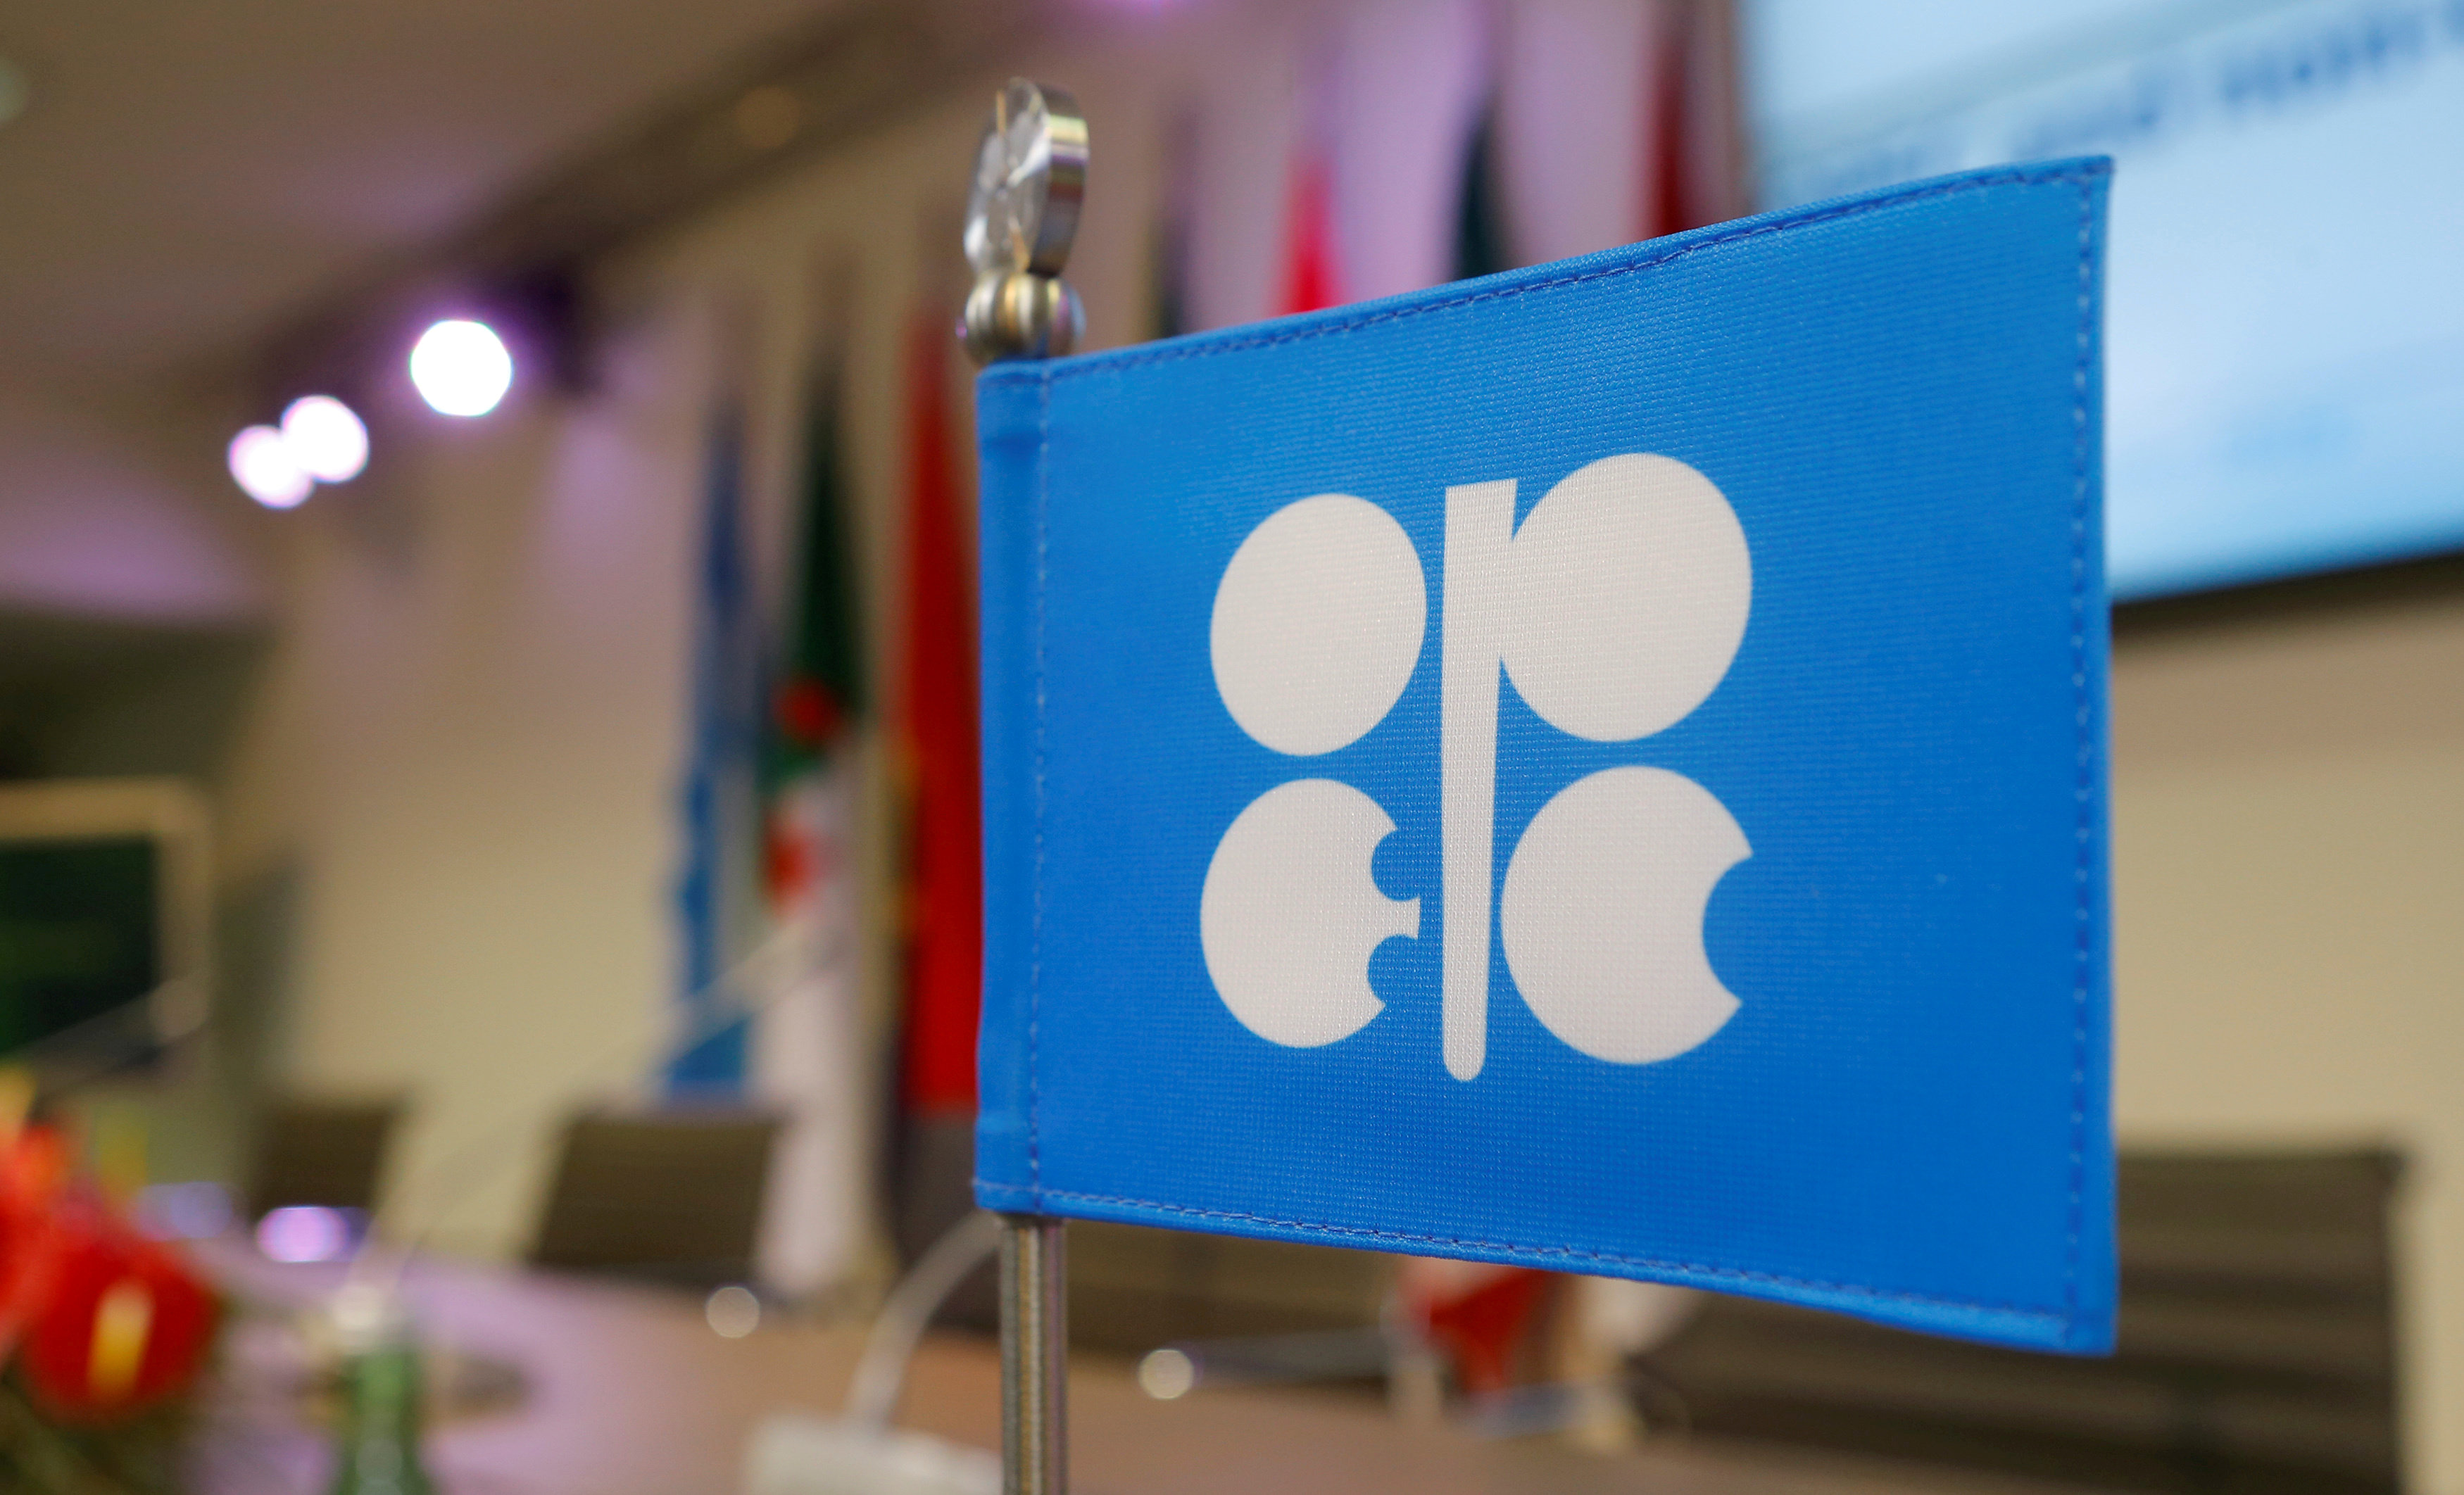 Opec's crude oil cut adherence rises in December